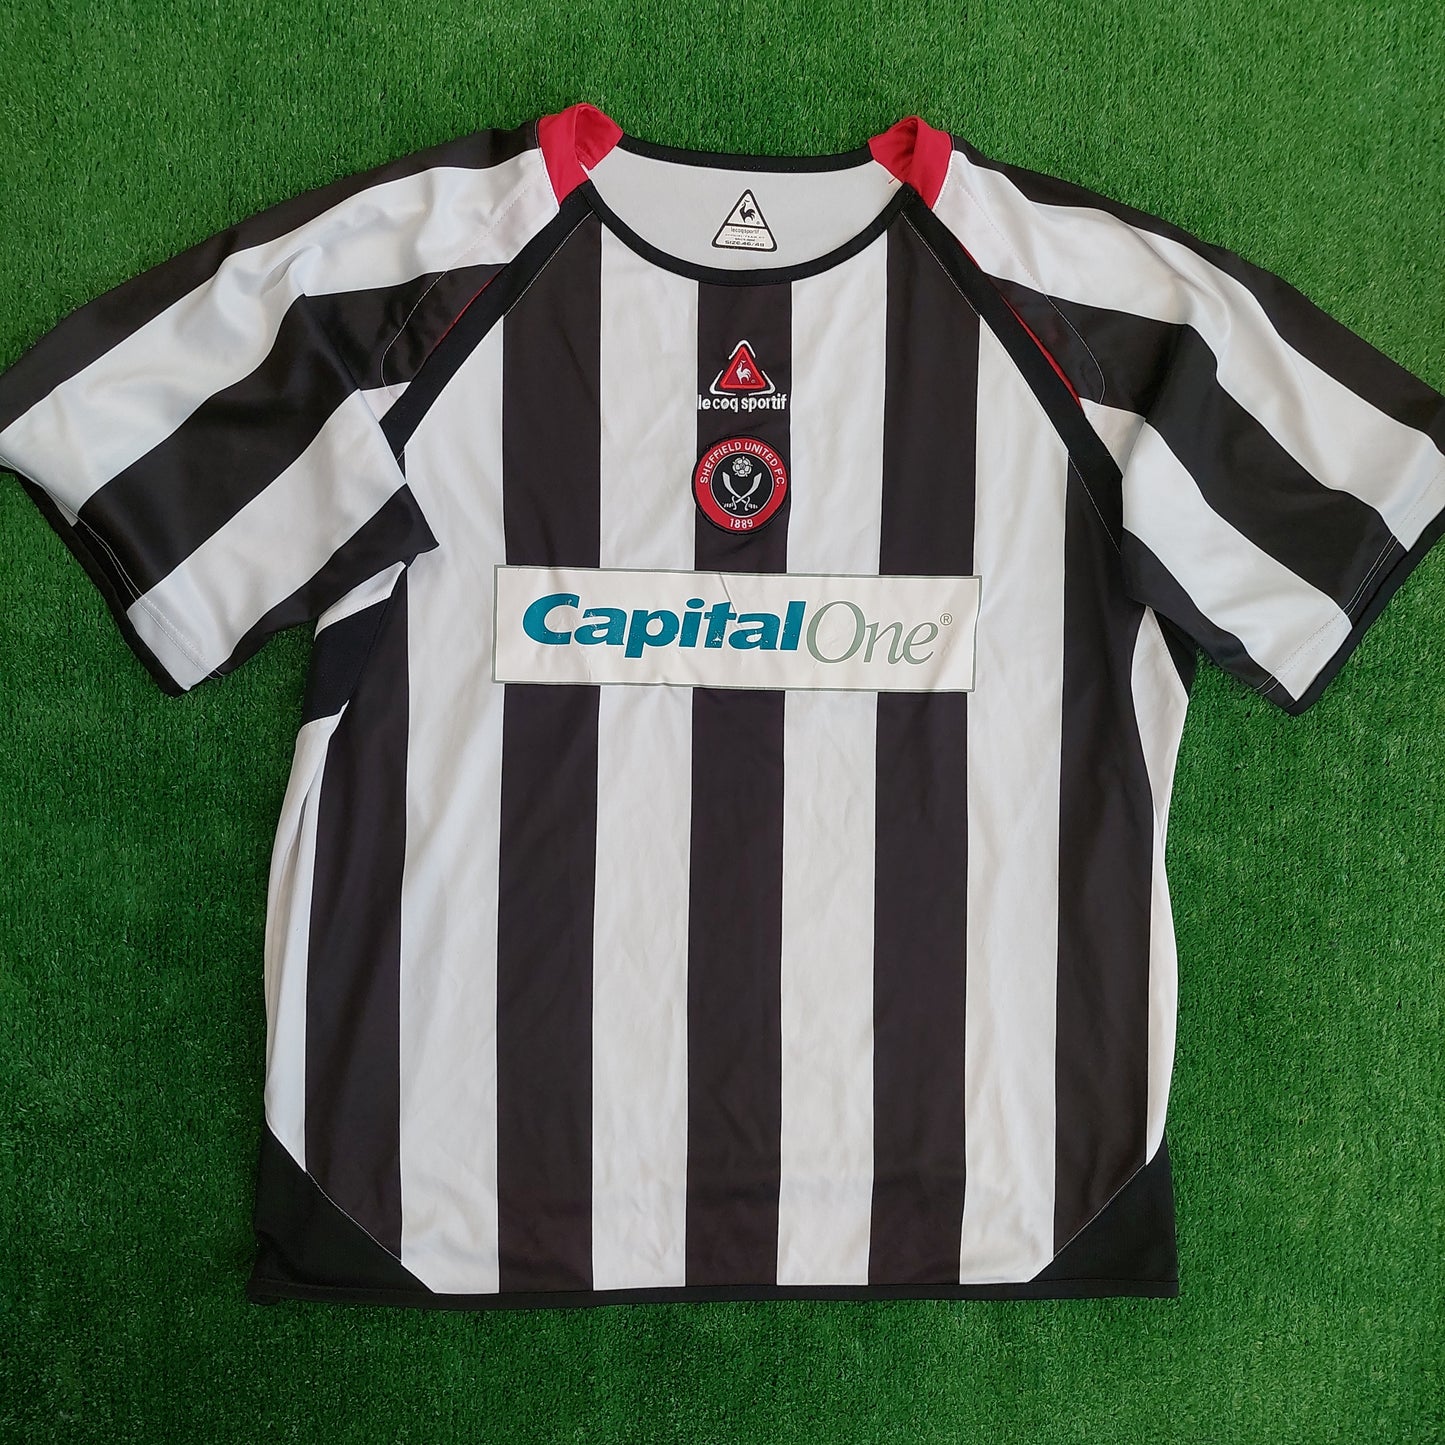 Sheffield United 2006/07 Away Shirt (Very Good) - Size L